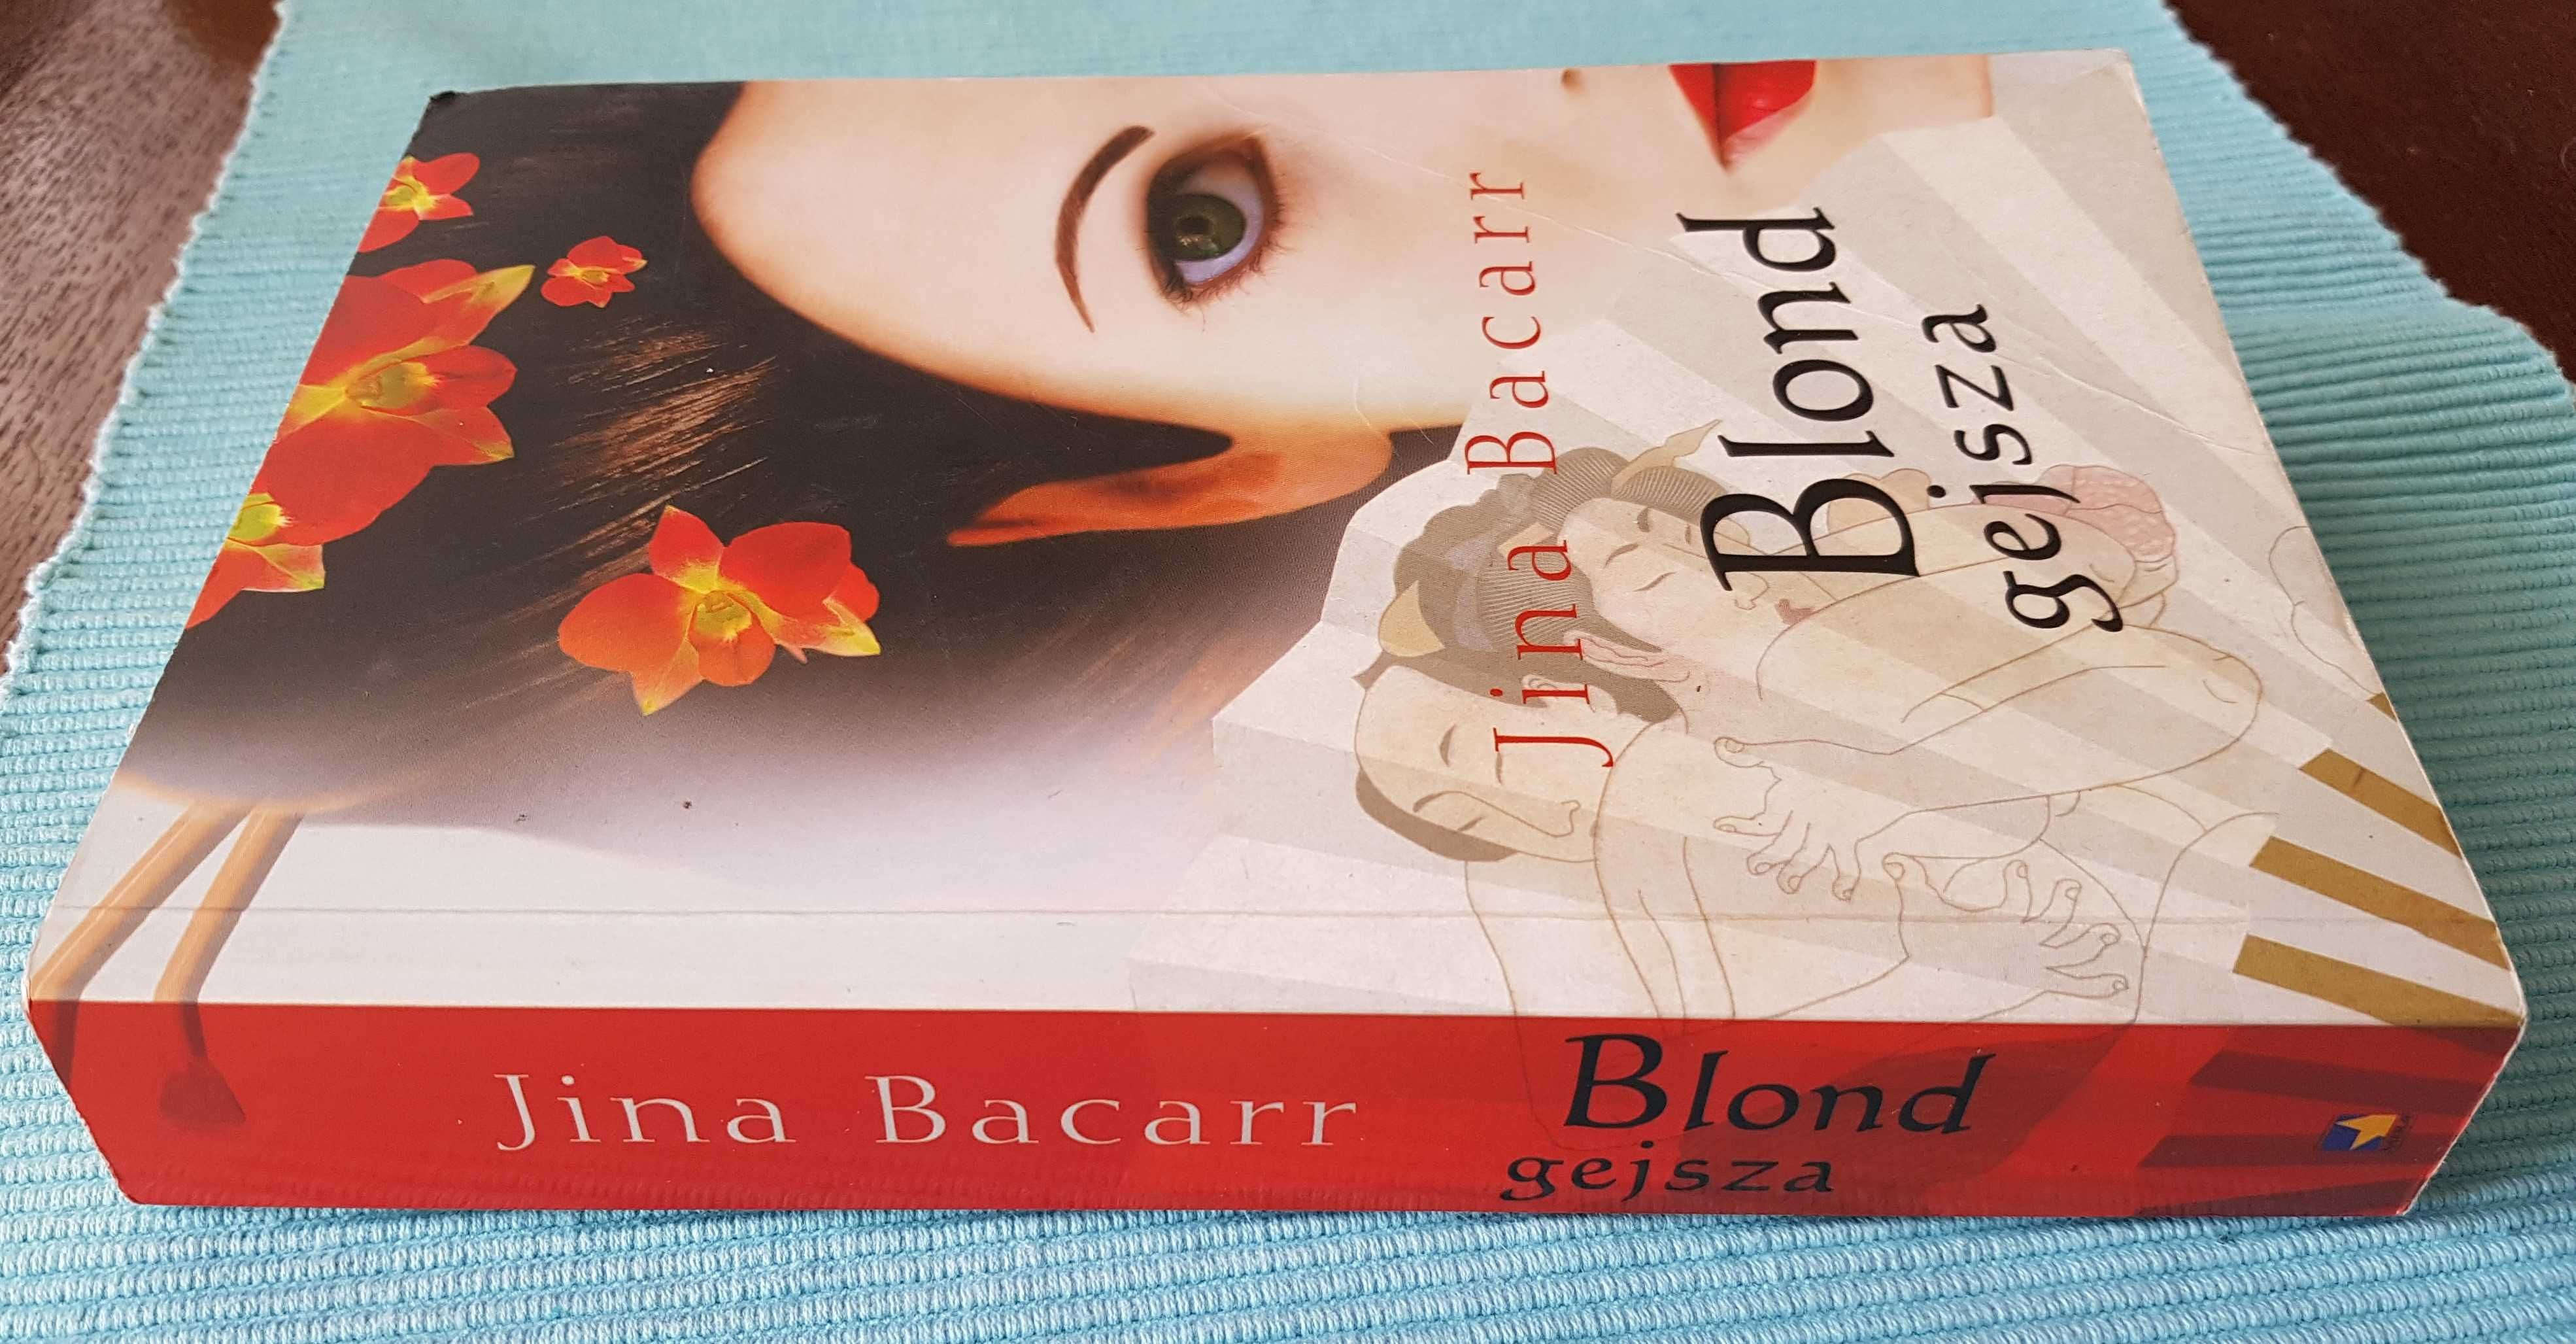 Blond gejsza, Jina Bacarr